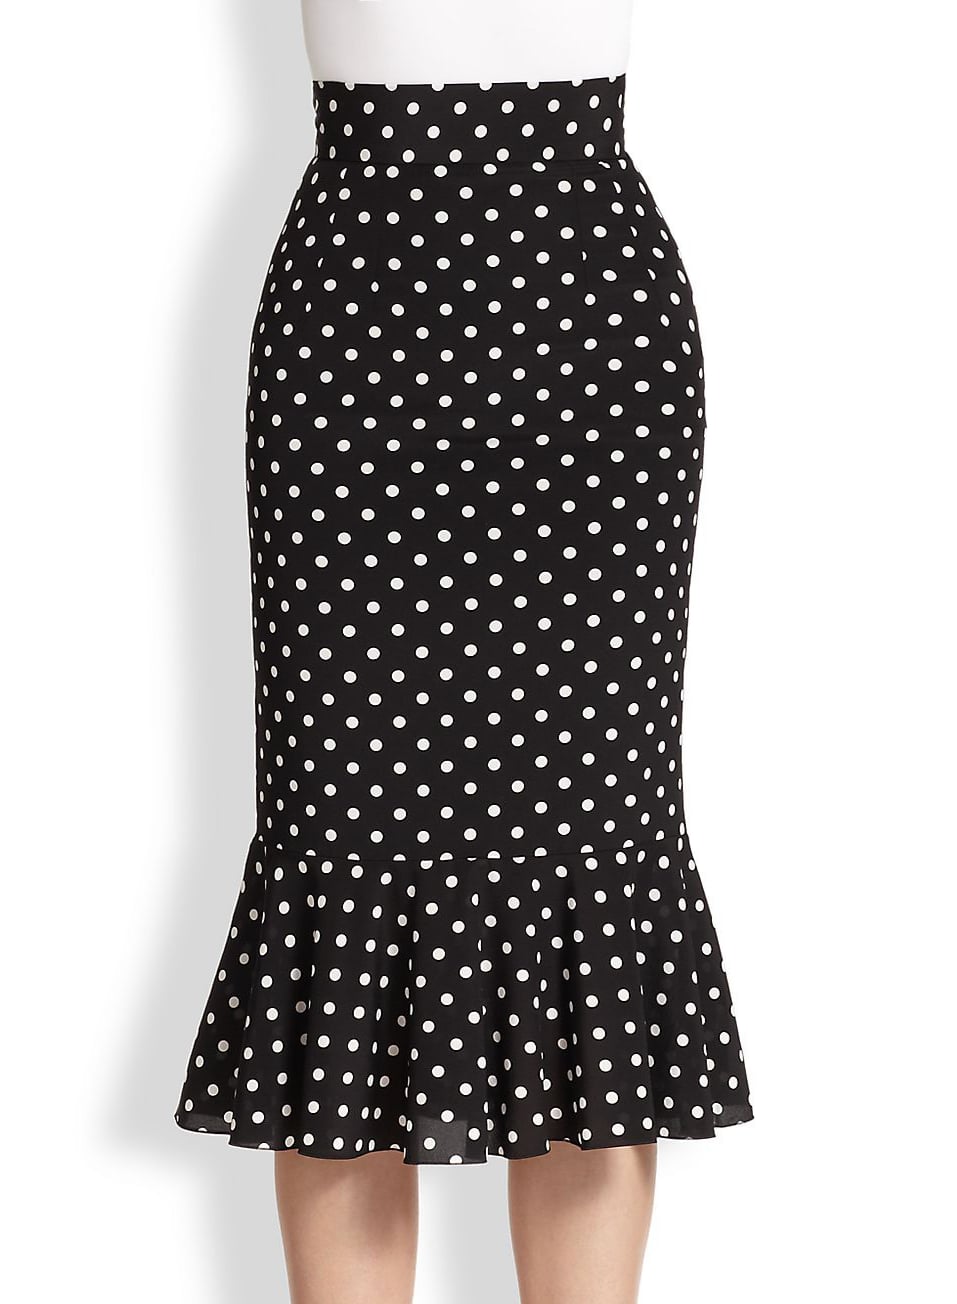 Dolce & Gabbana black-and-white polka-dot trumpet skirt ($995) | Wear Polka  Dots Like a Grown-Up | POPSUGAR Fashion Photo 3